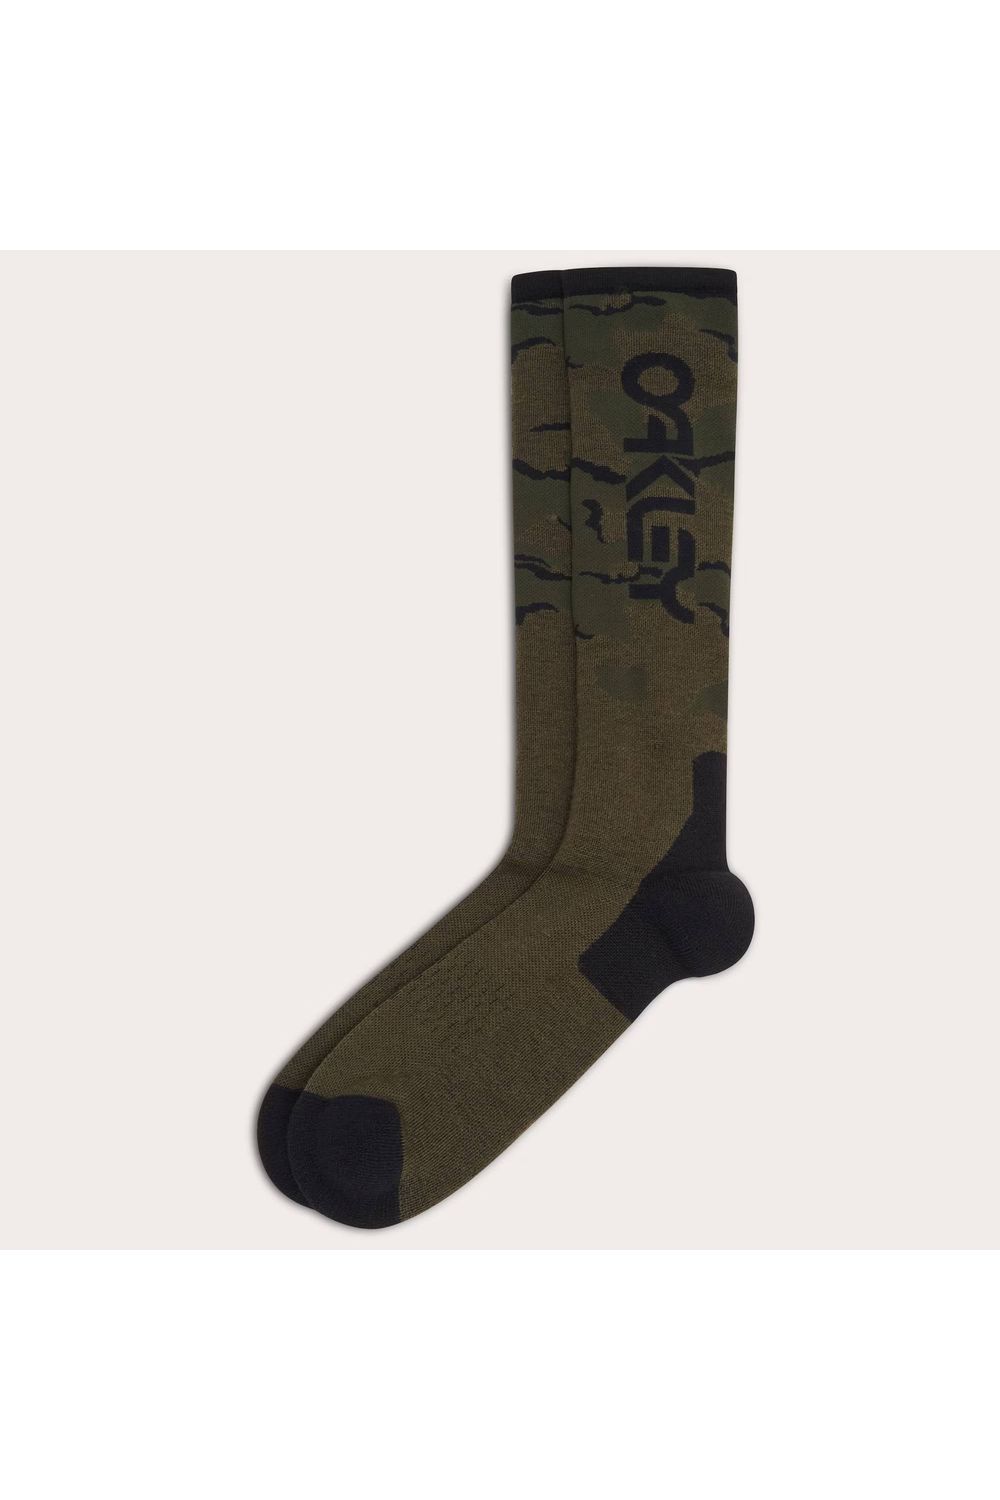 Oakley Wanderlust Perf Socks 2.0 B1B Camo Hunter